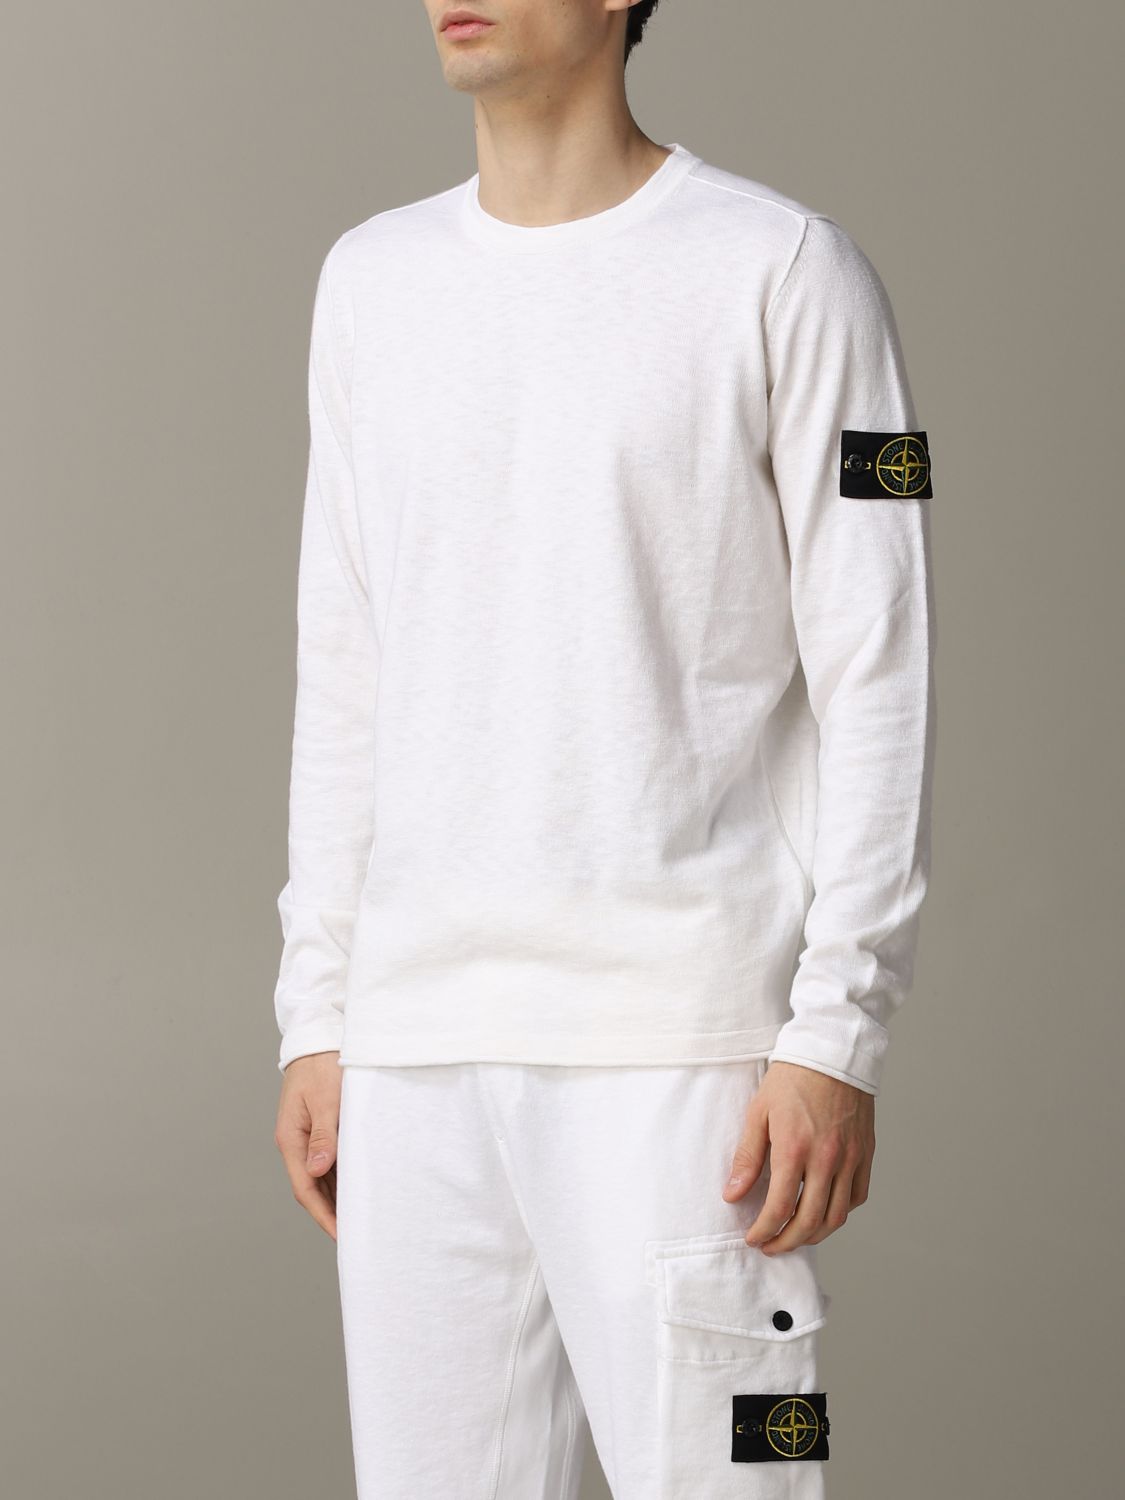 STONE ISLAND: crewneck sweater with logo - White | Stone Island sweater ...